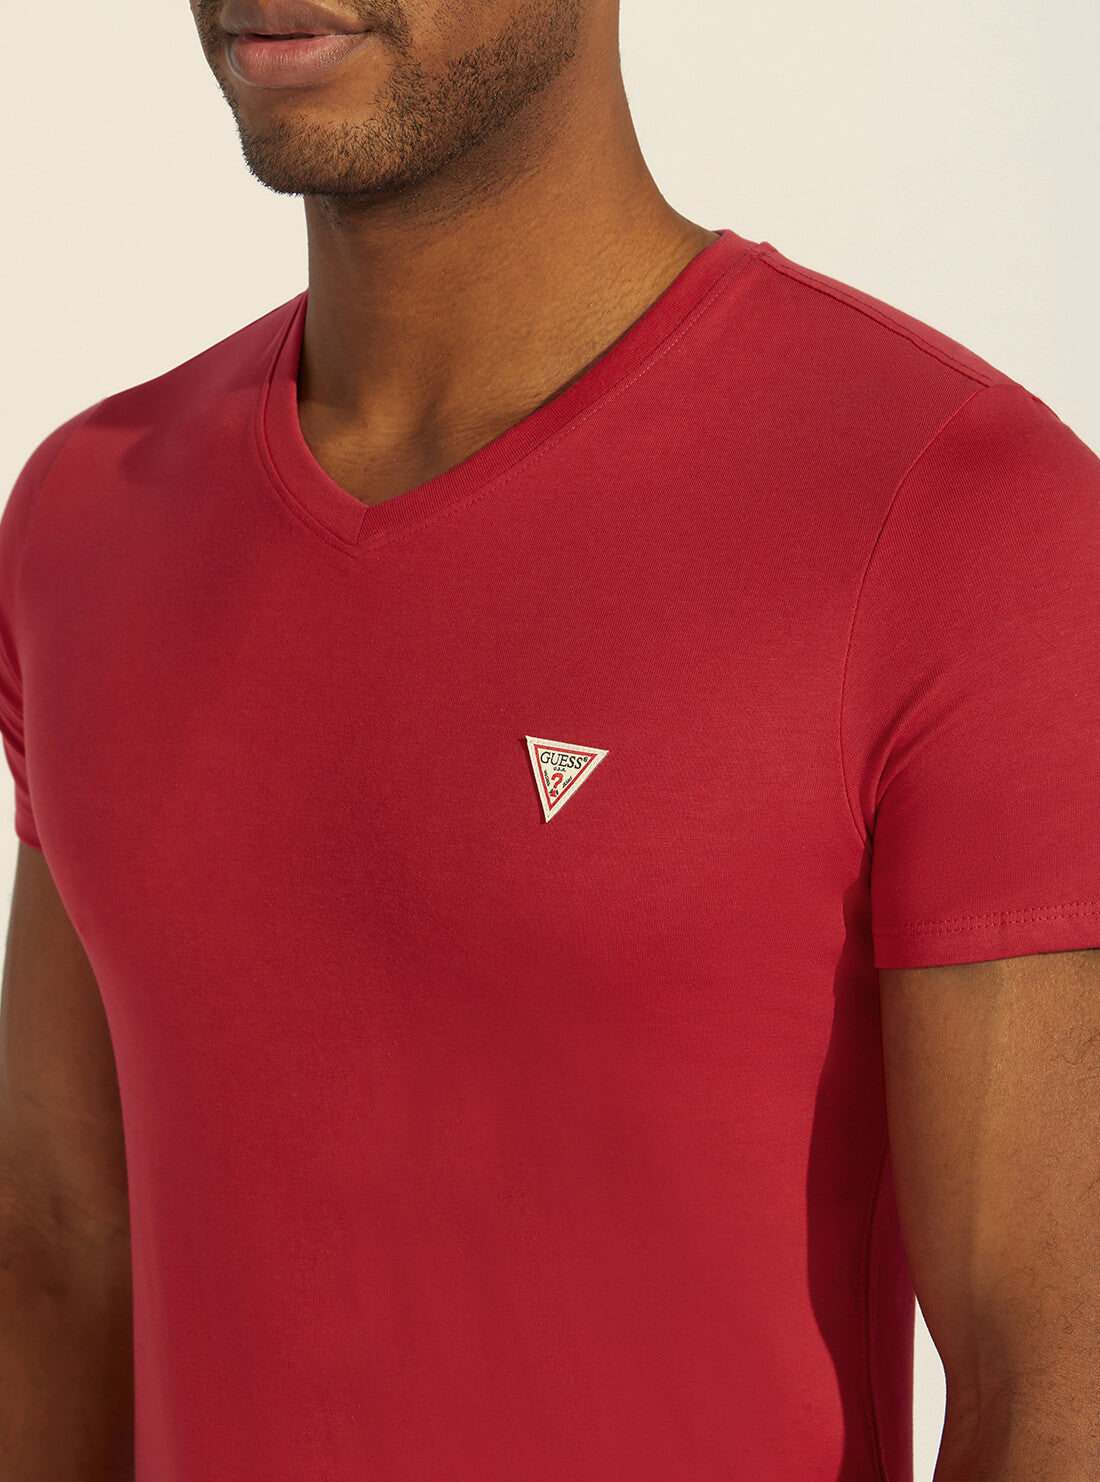 GUESS Mens Eco Red V-Neck Basic T-Shirt M1RI37I3Z11 Detail View